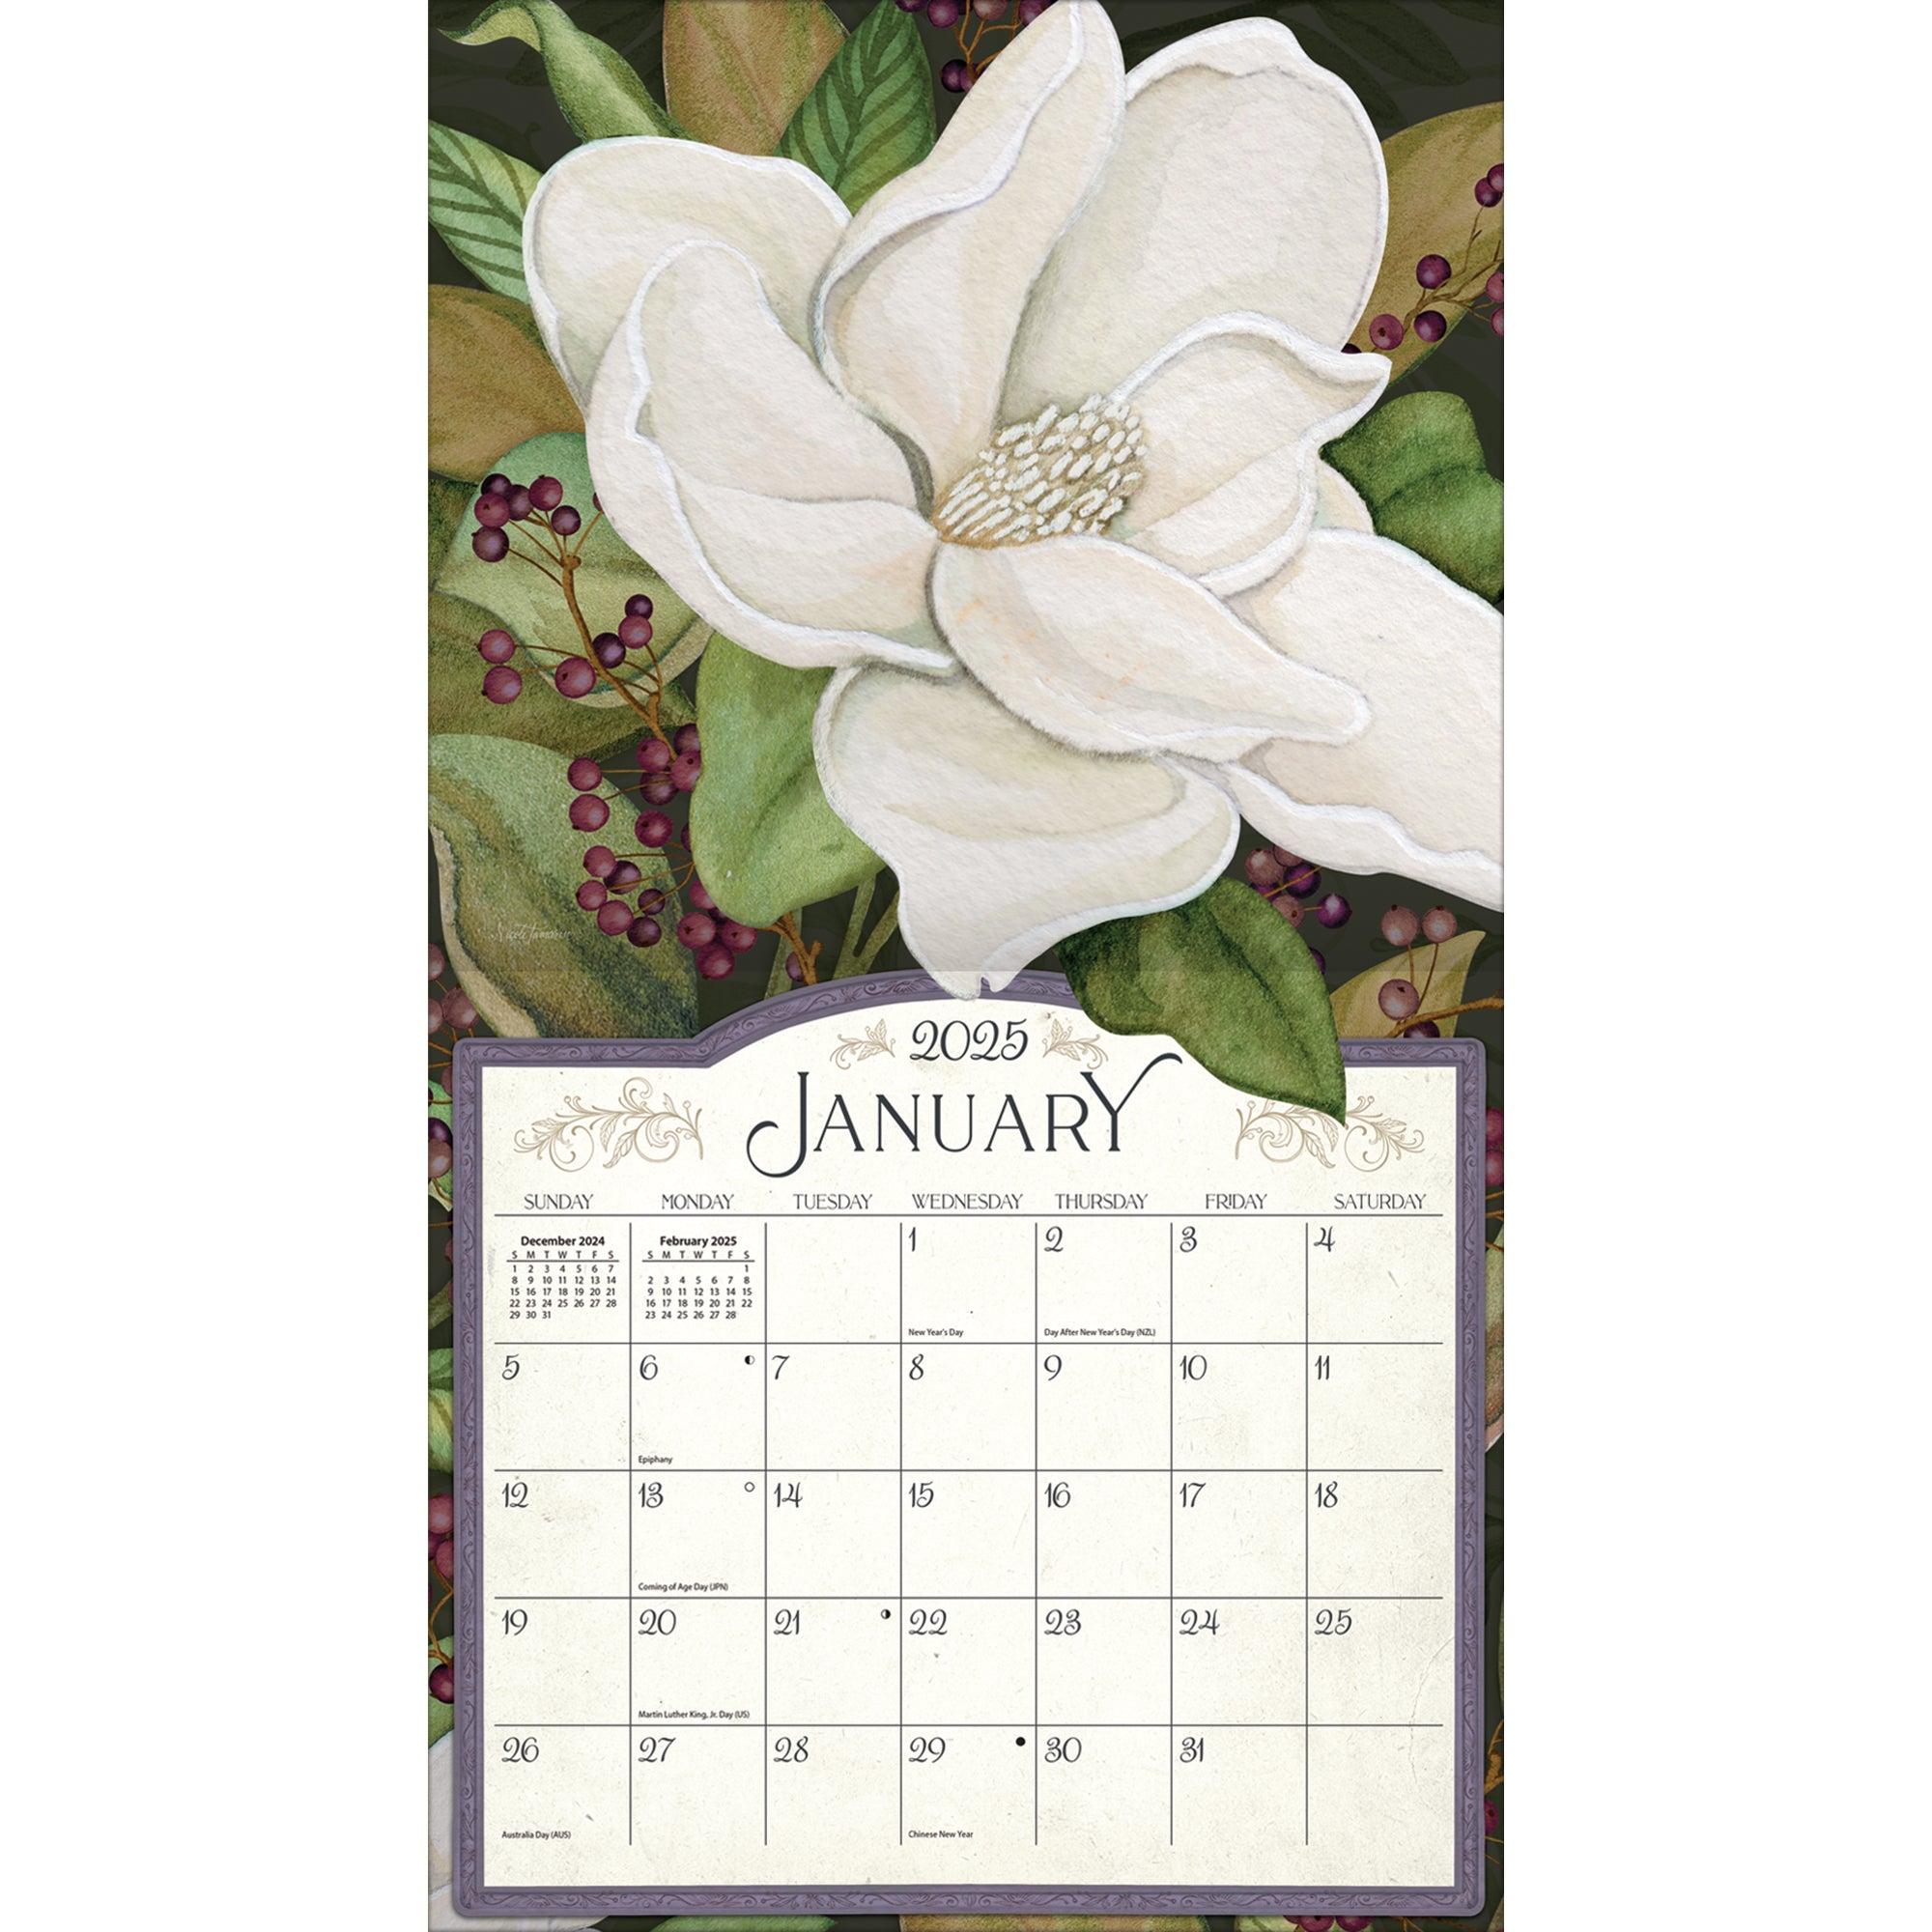 2025 Midnight Garden By Nicole Tamarin - LANG Deluxe Wall Calendar